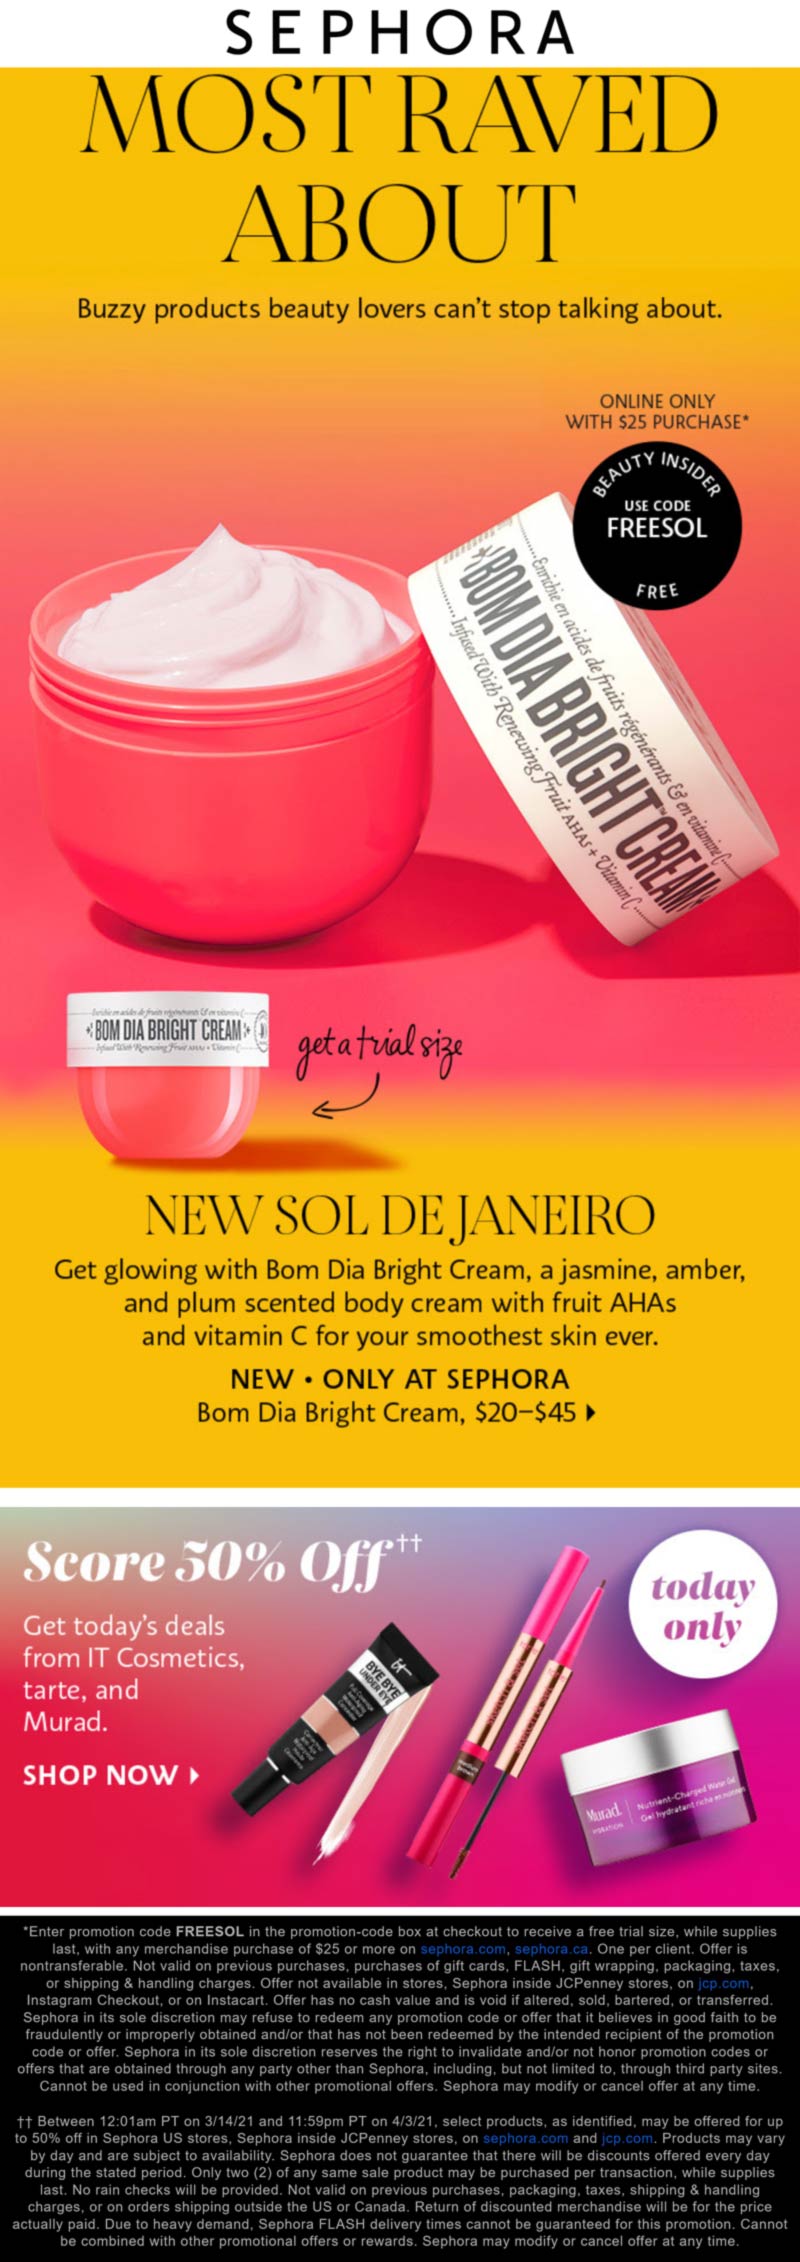 50 off various + free bright cream today at Sephora beauty via promo